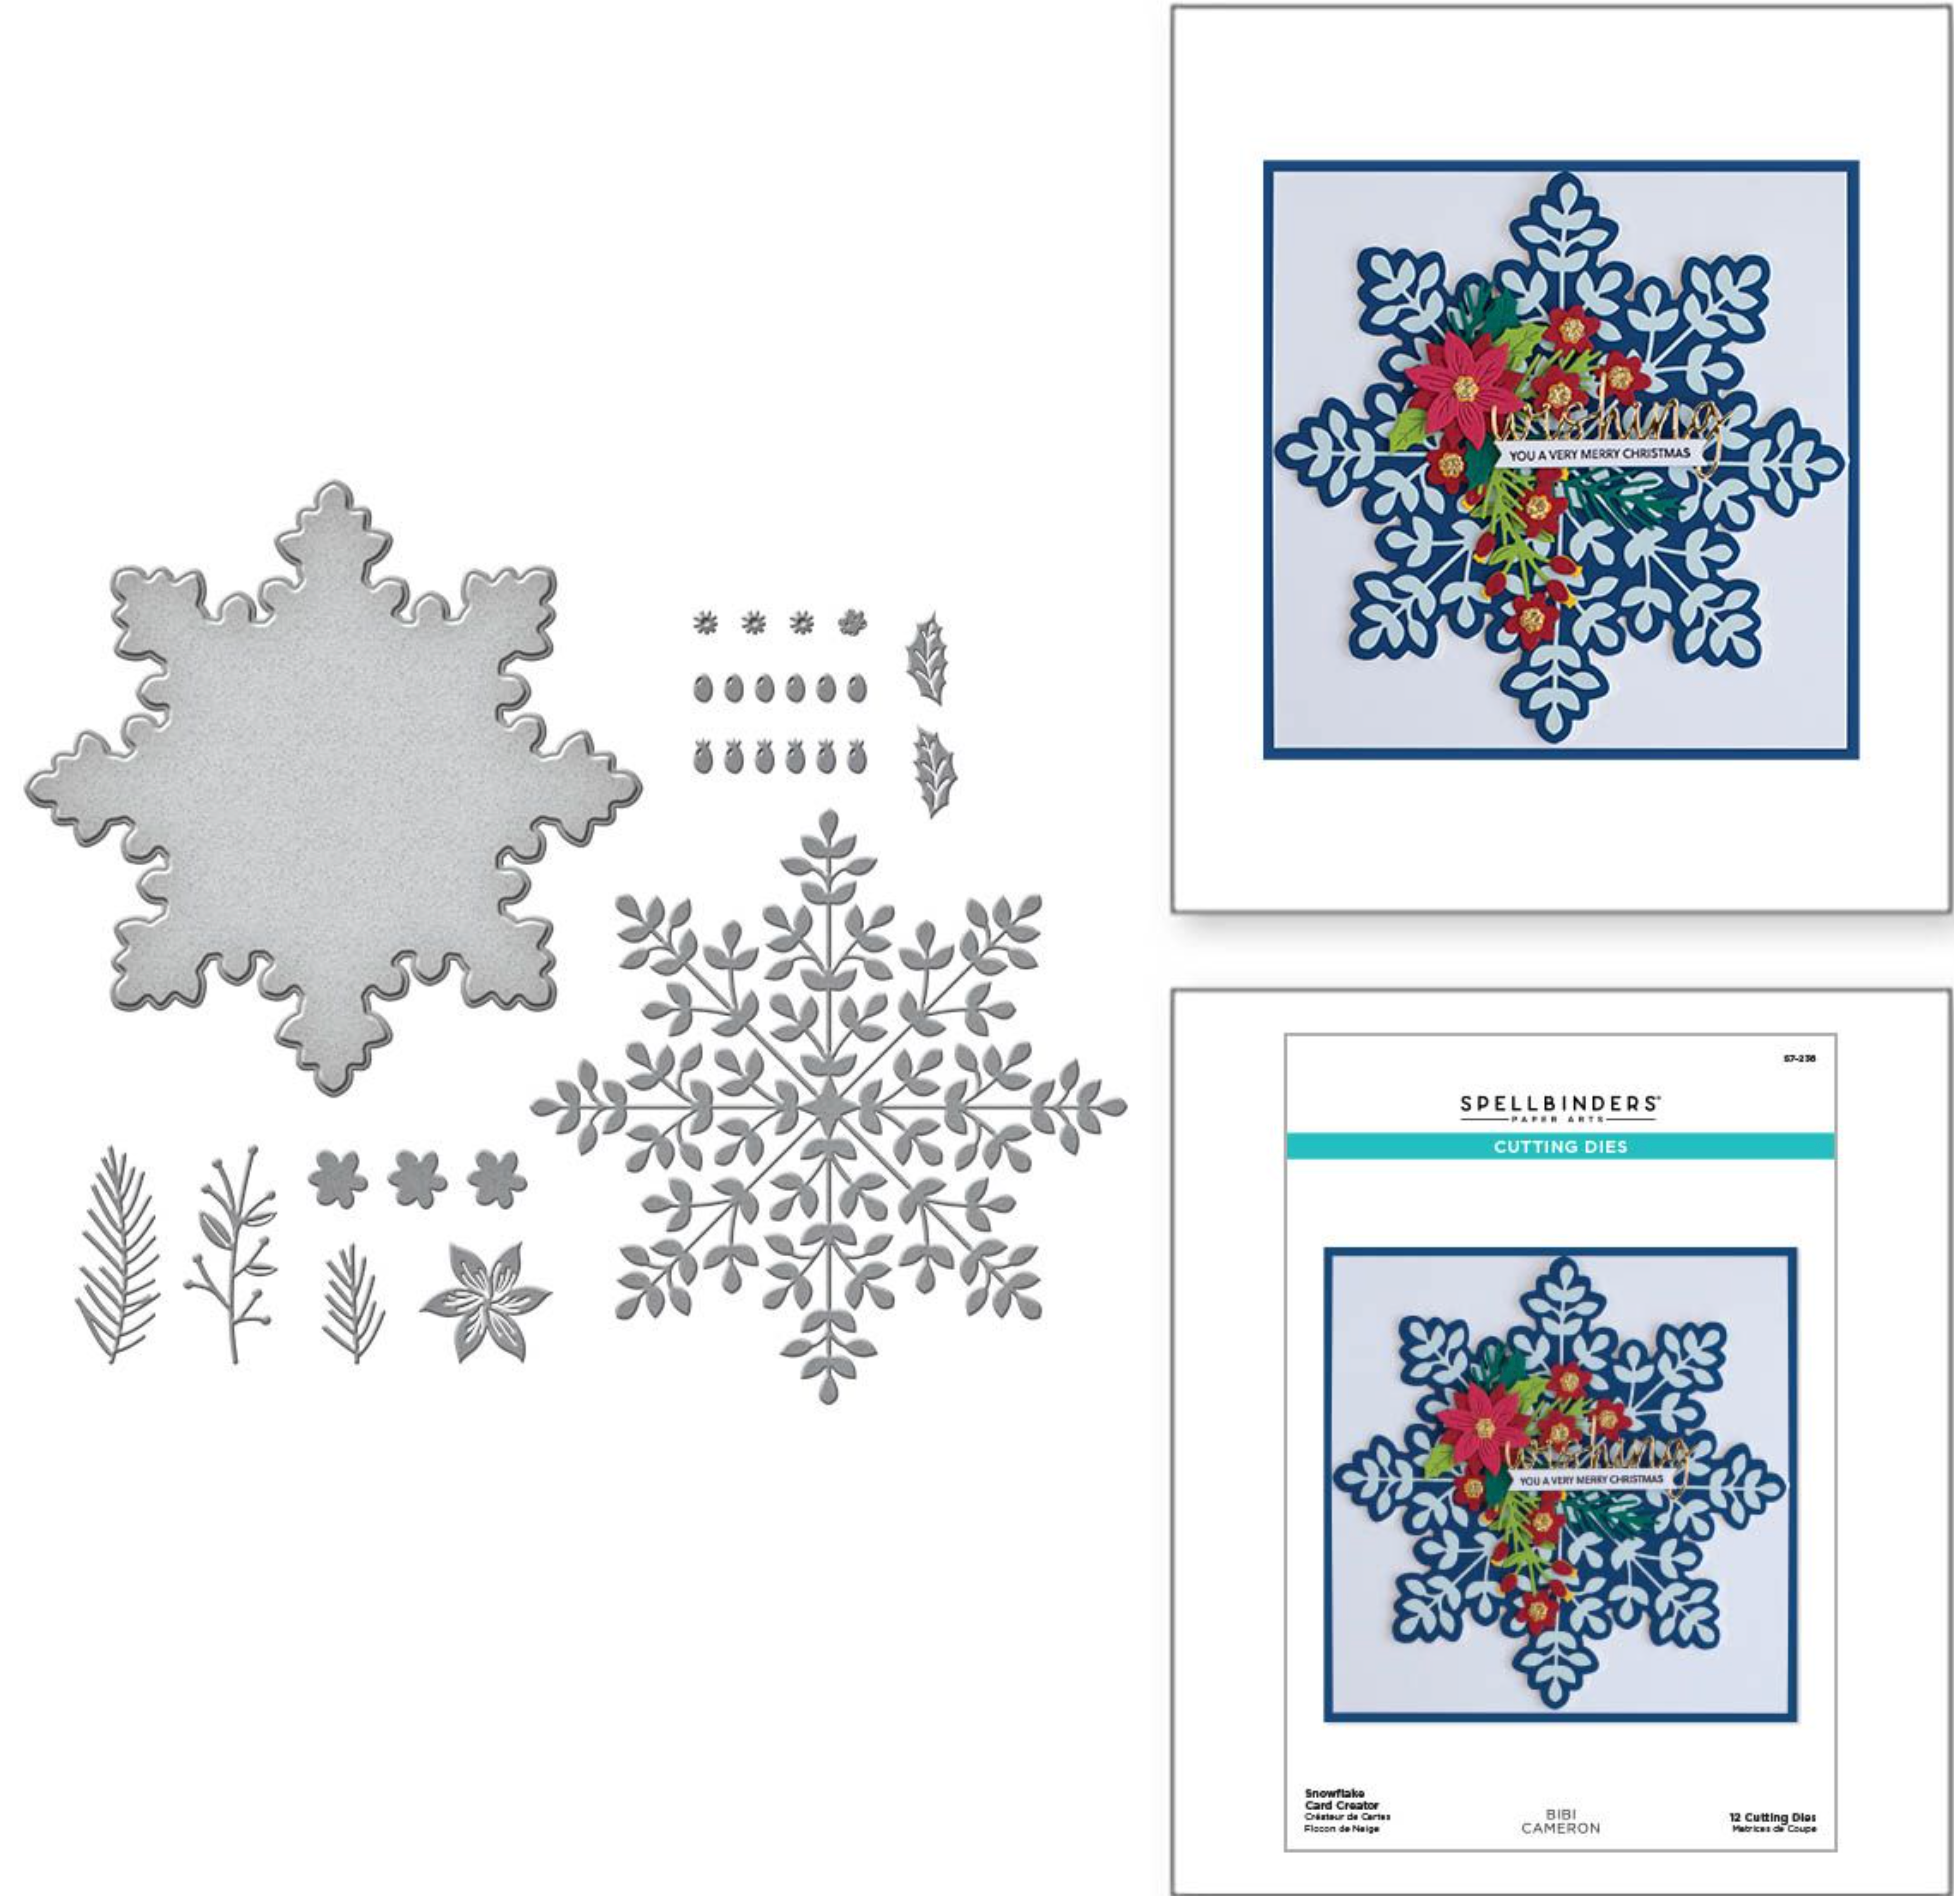 Coopay Glitter Foam Snowflake Stickers Self-Adhesive Snowflake